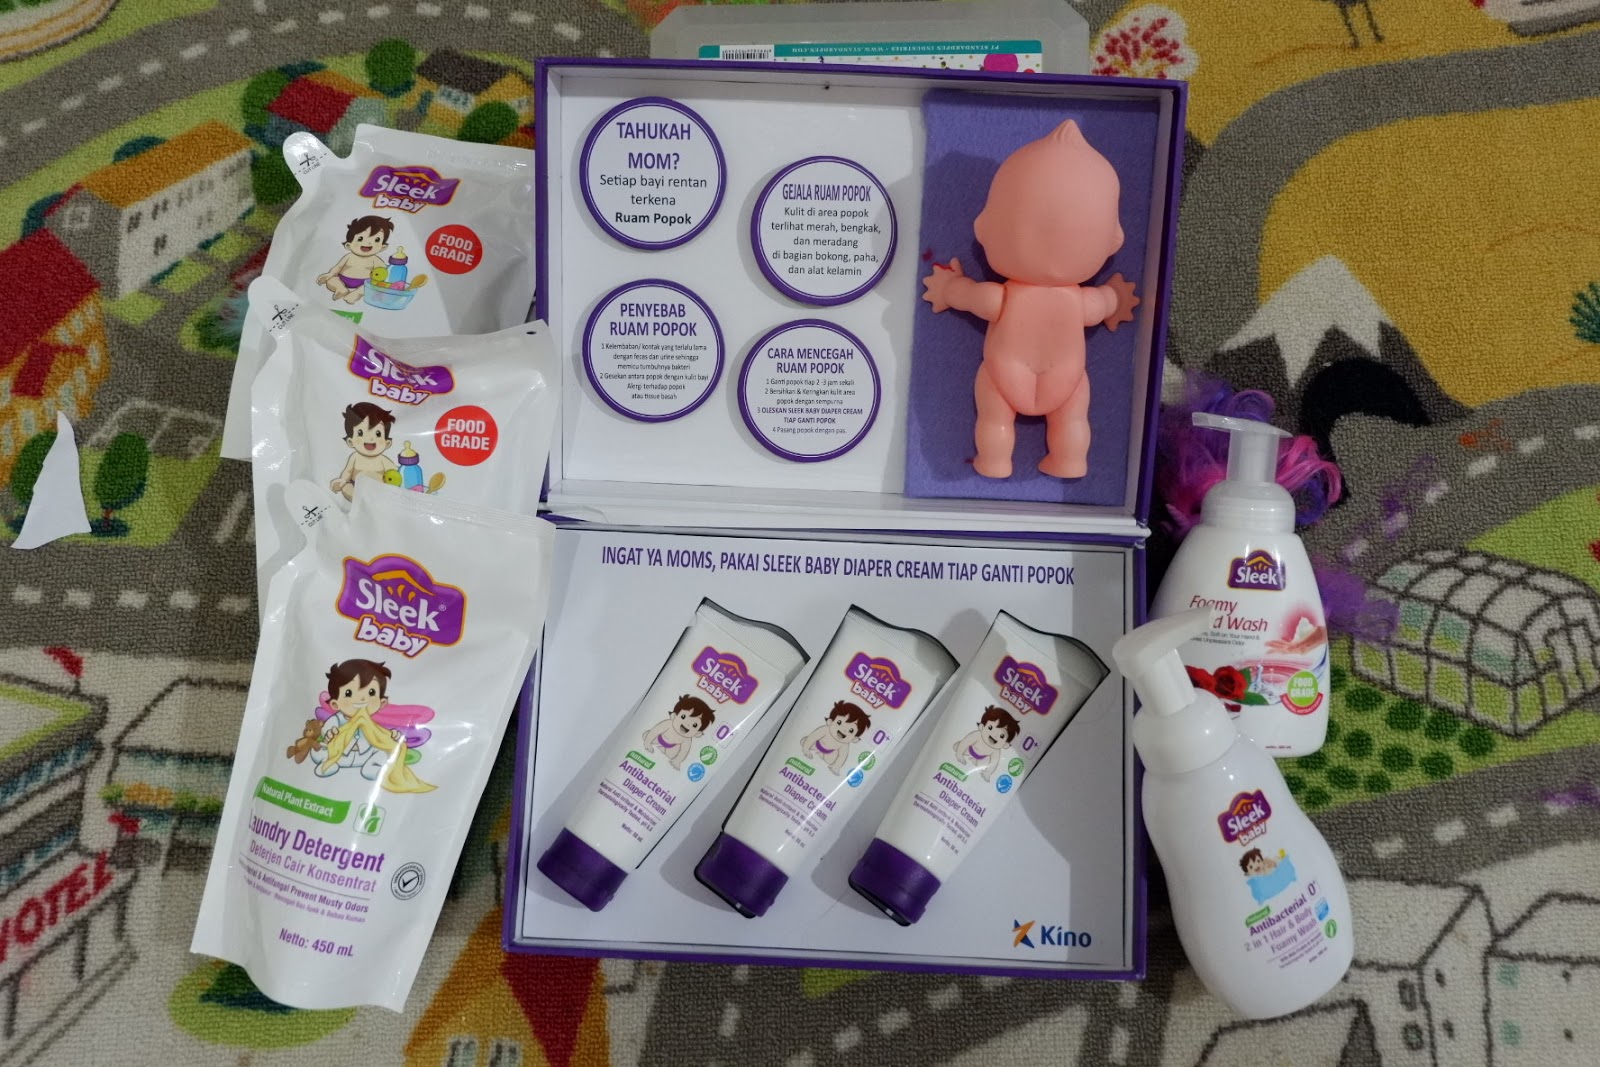 Life Cherish Sleek Baby Diaper Cream Solusi Untuk Ruam Popok